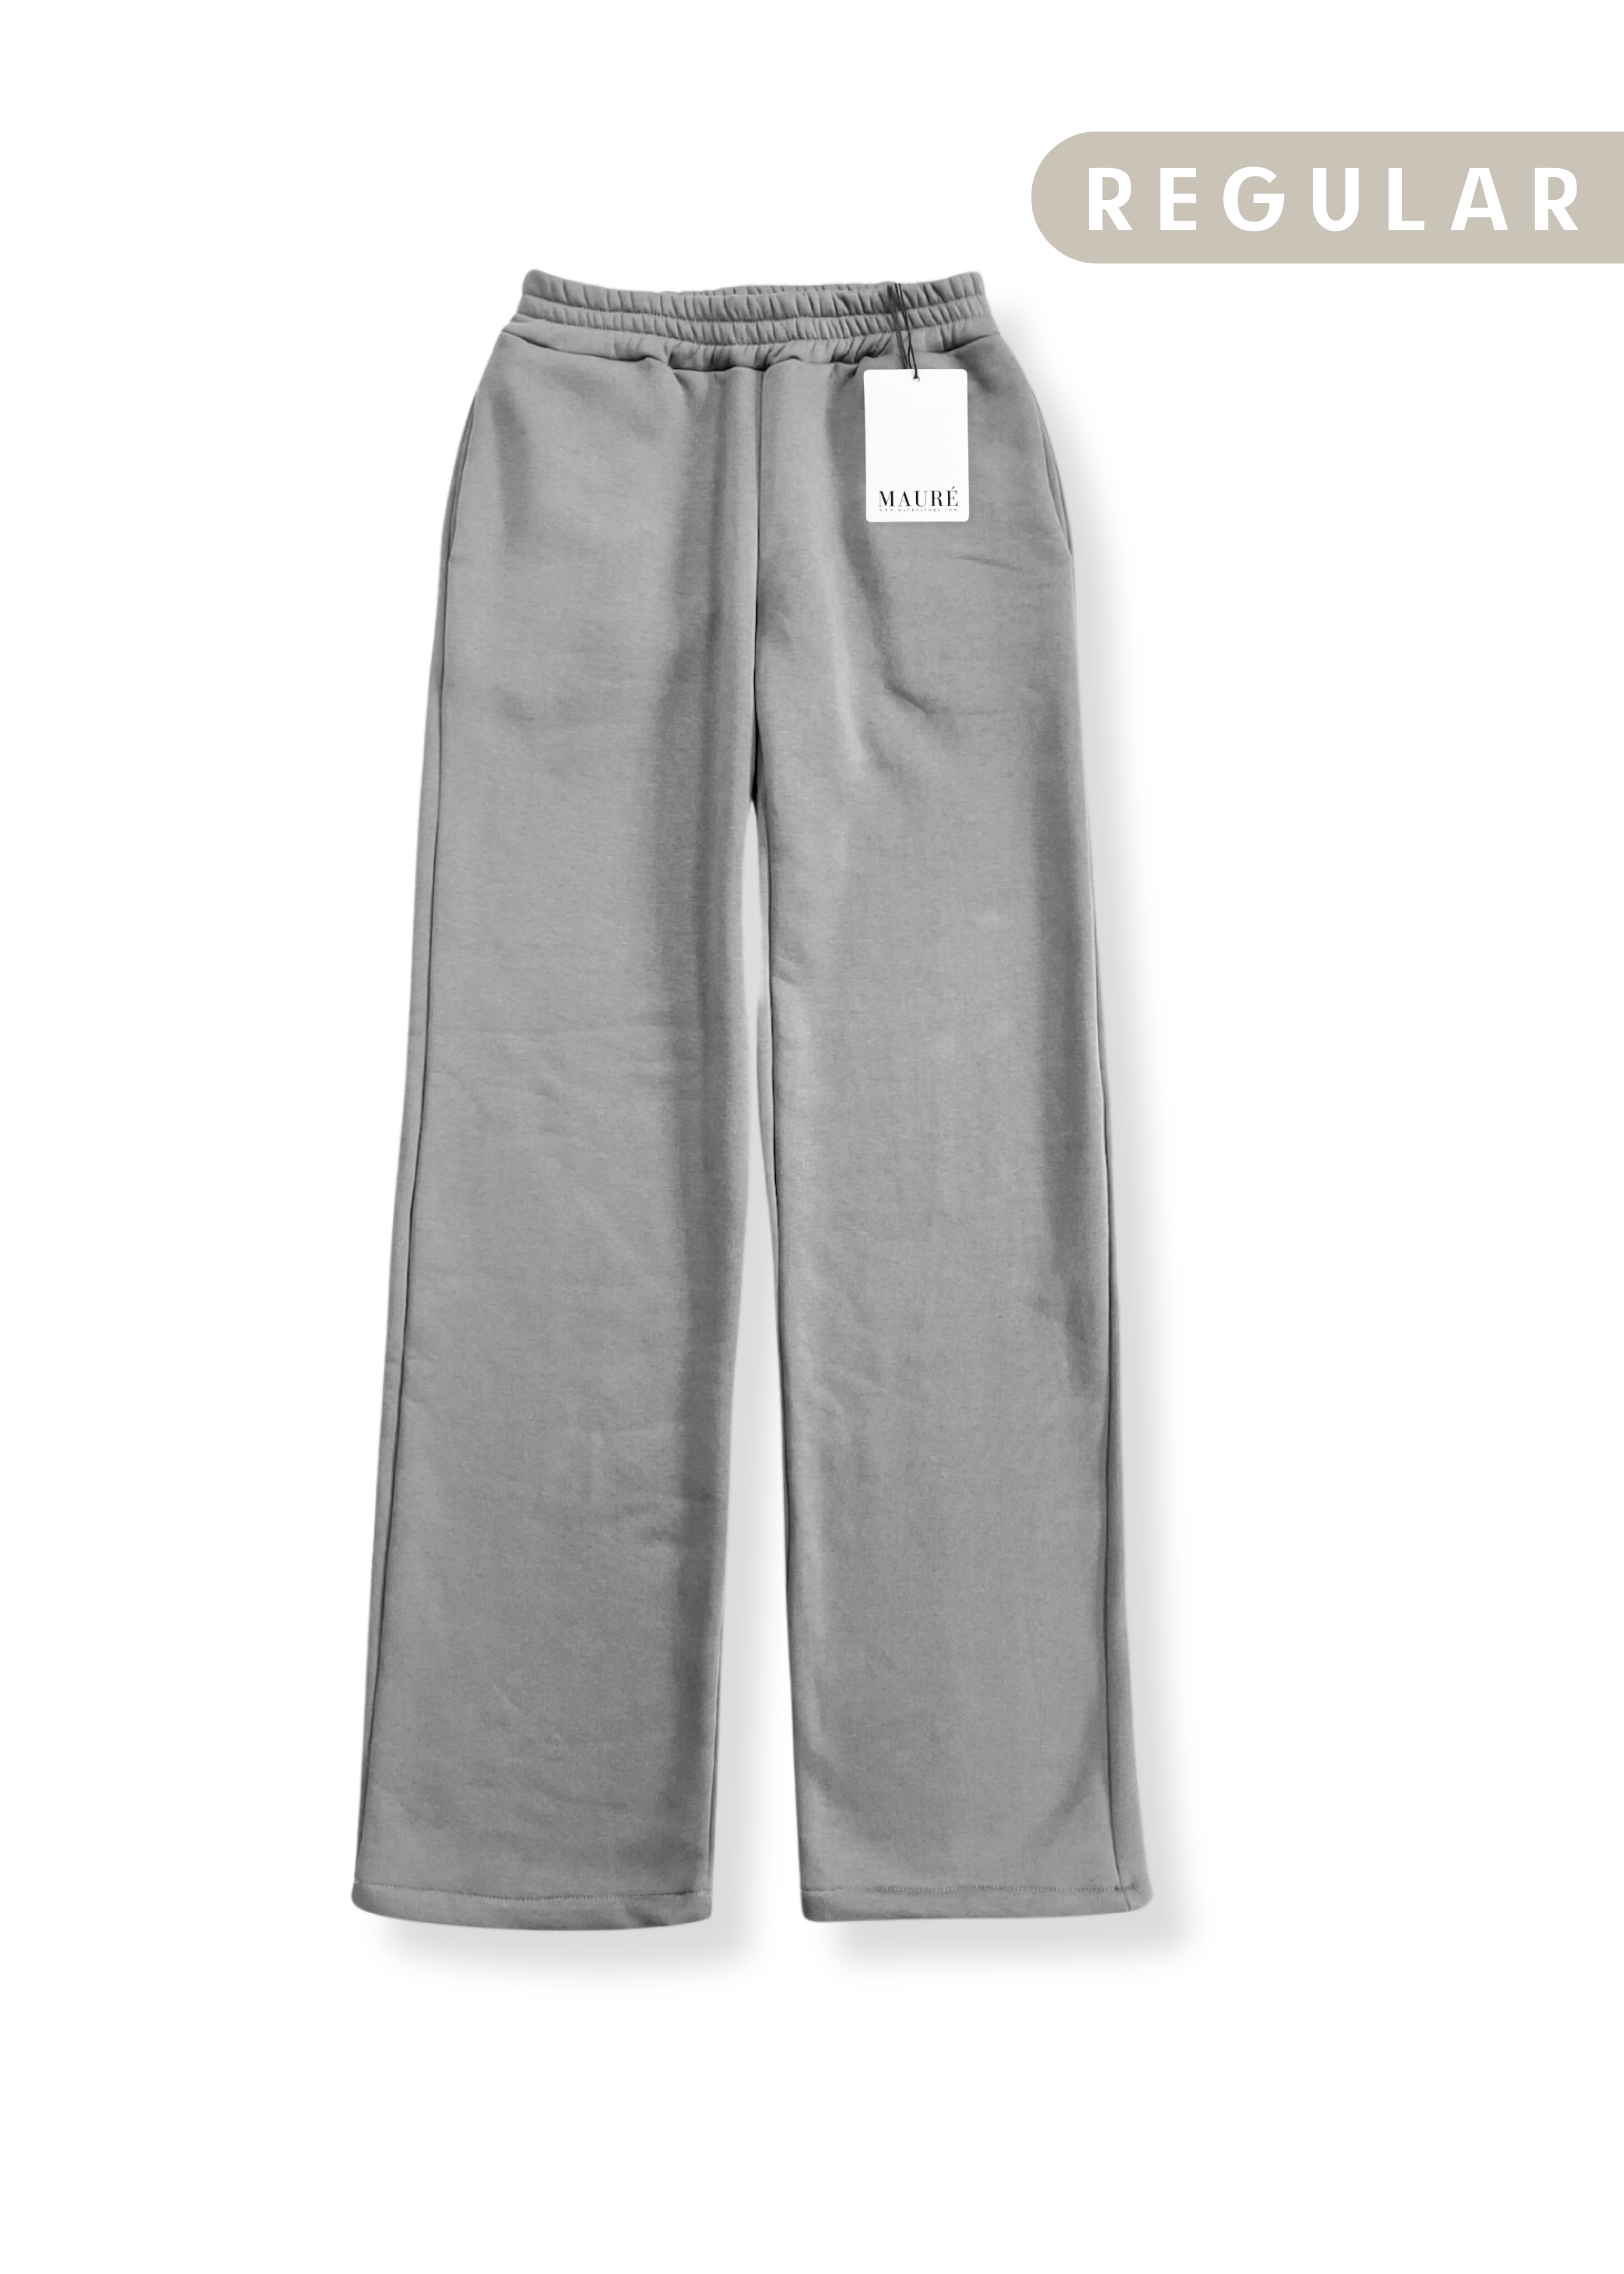 Pantalon jogger taille basse/moyenne gris (REGULAR)